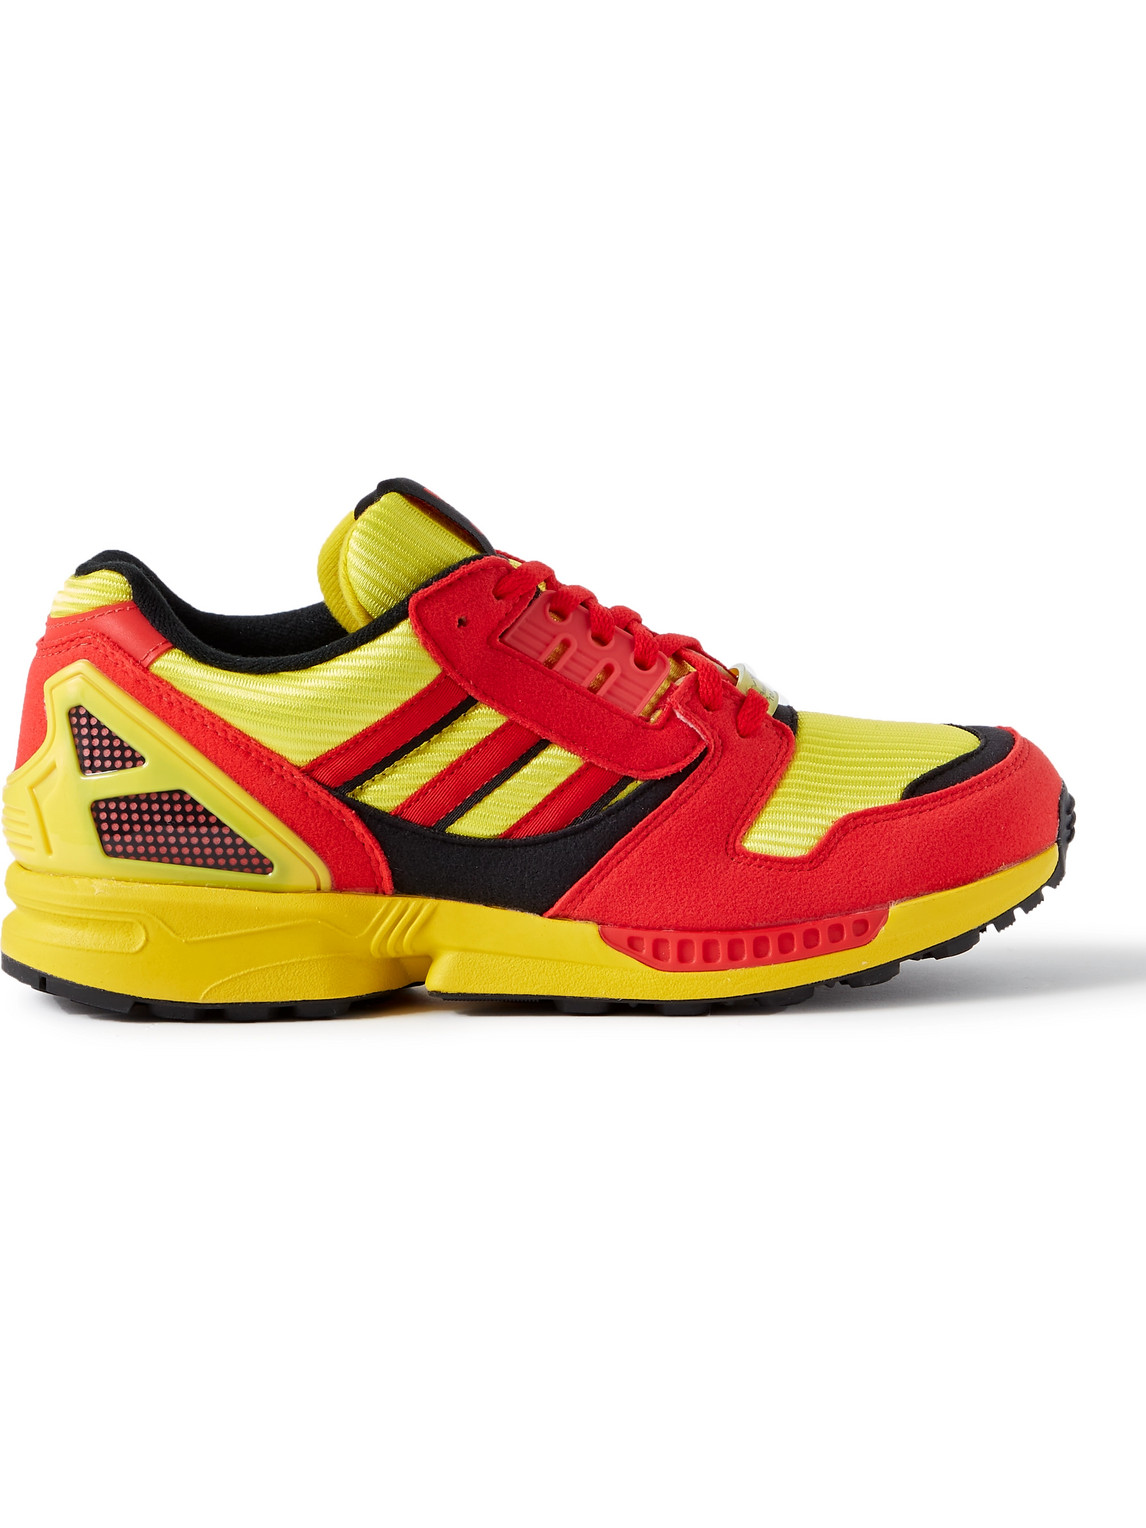 Adidas Consortium Zx8000 Suede And Mesh Sneakers In Multicolor